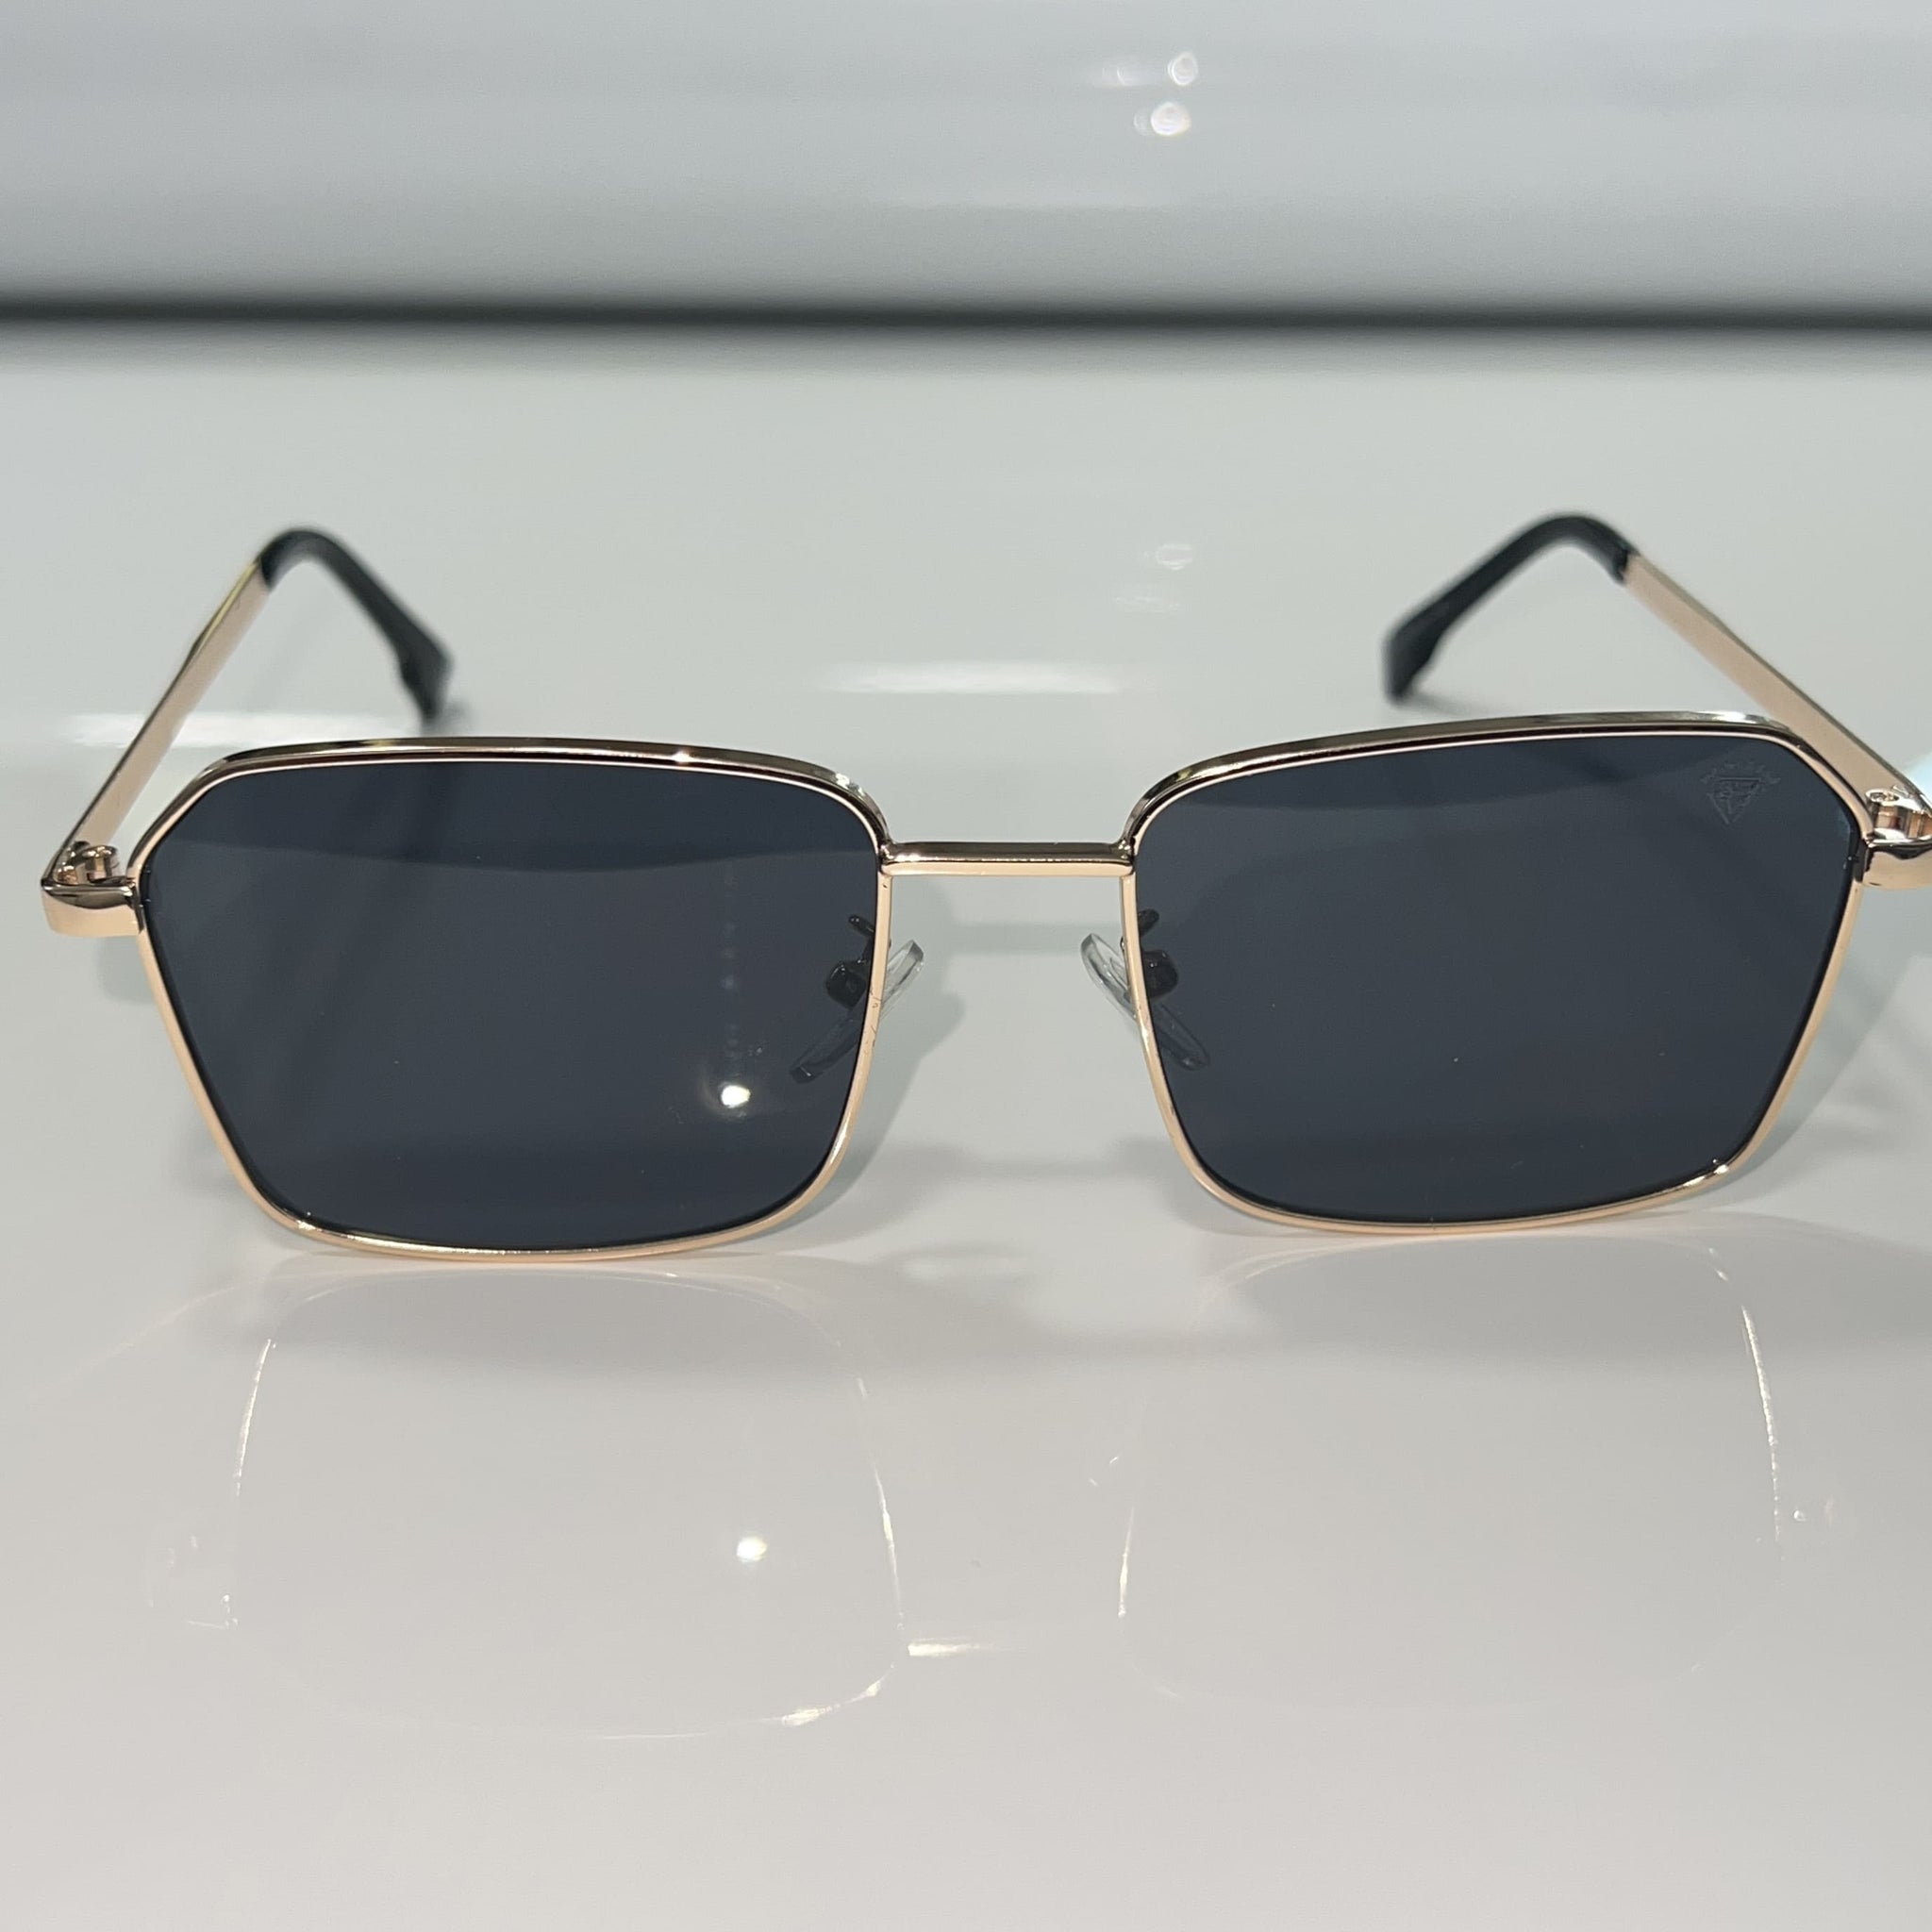 Celebrity Glasses - 14k gold plated - Sehgal Glasses - Black Shade